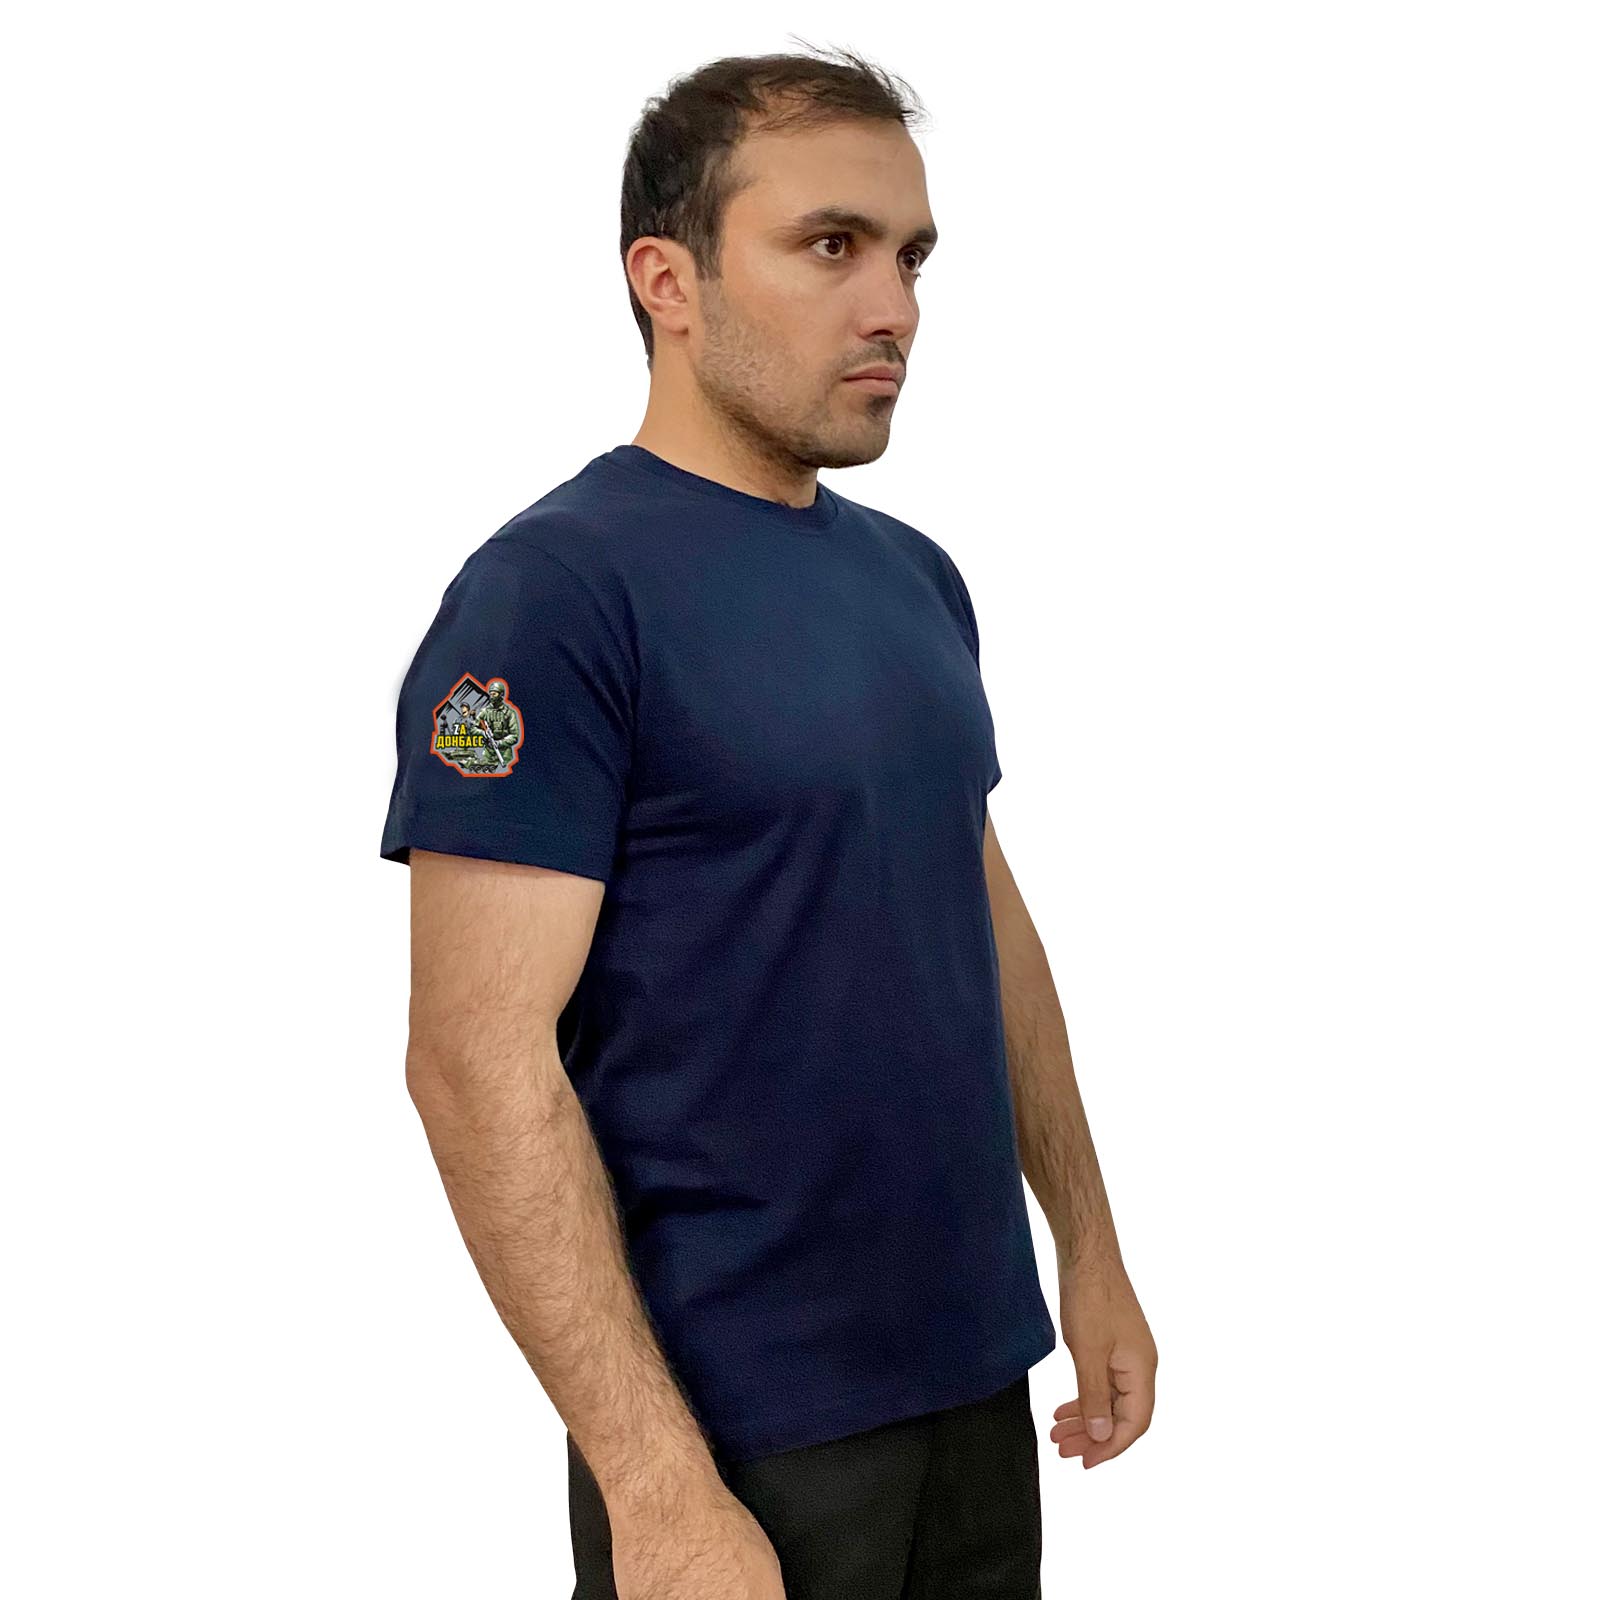 Тёмно-синяя футболка "Zа Донбасс" с термотрансфером на рукаве